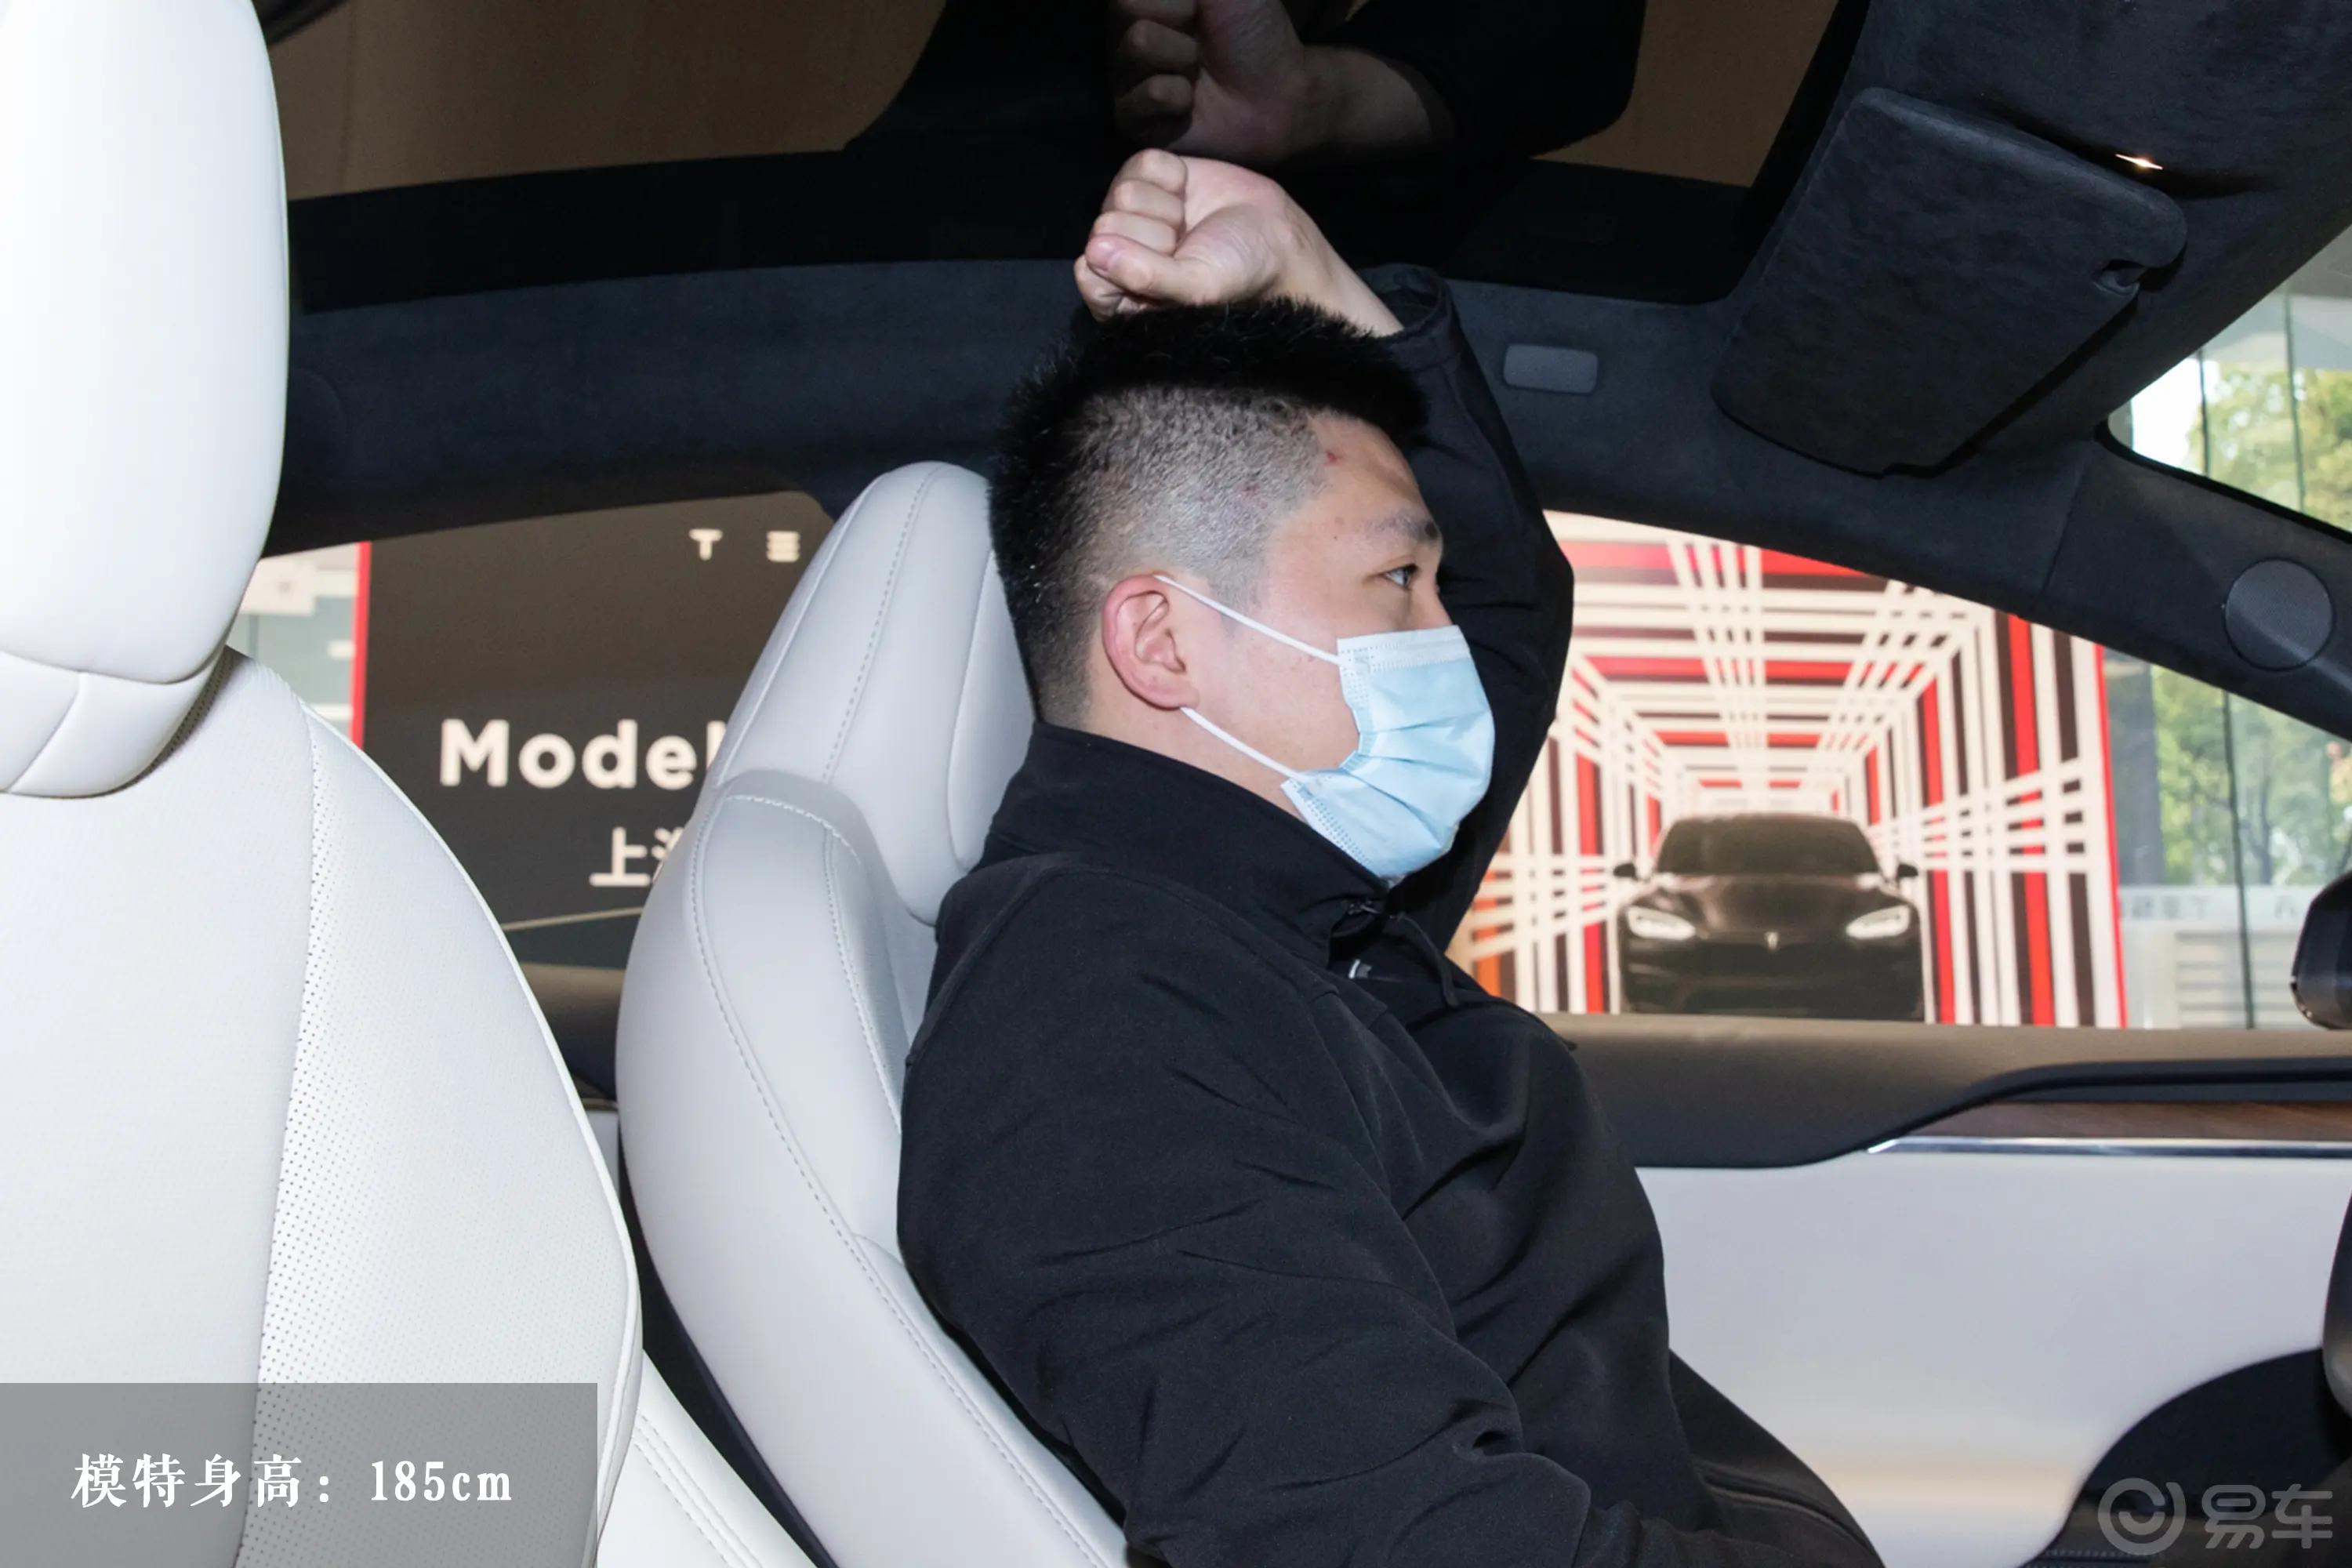 Model S715km 双电机全轮驱动前排头部空间